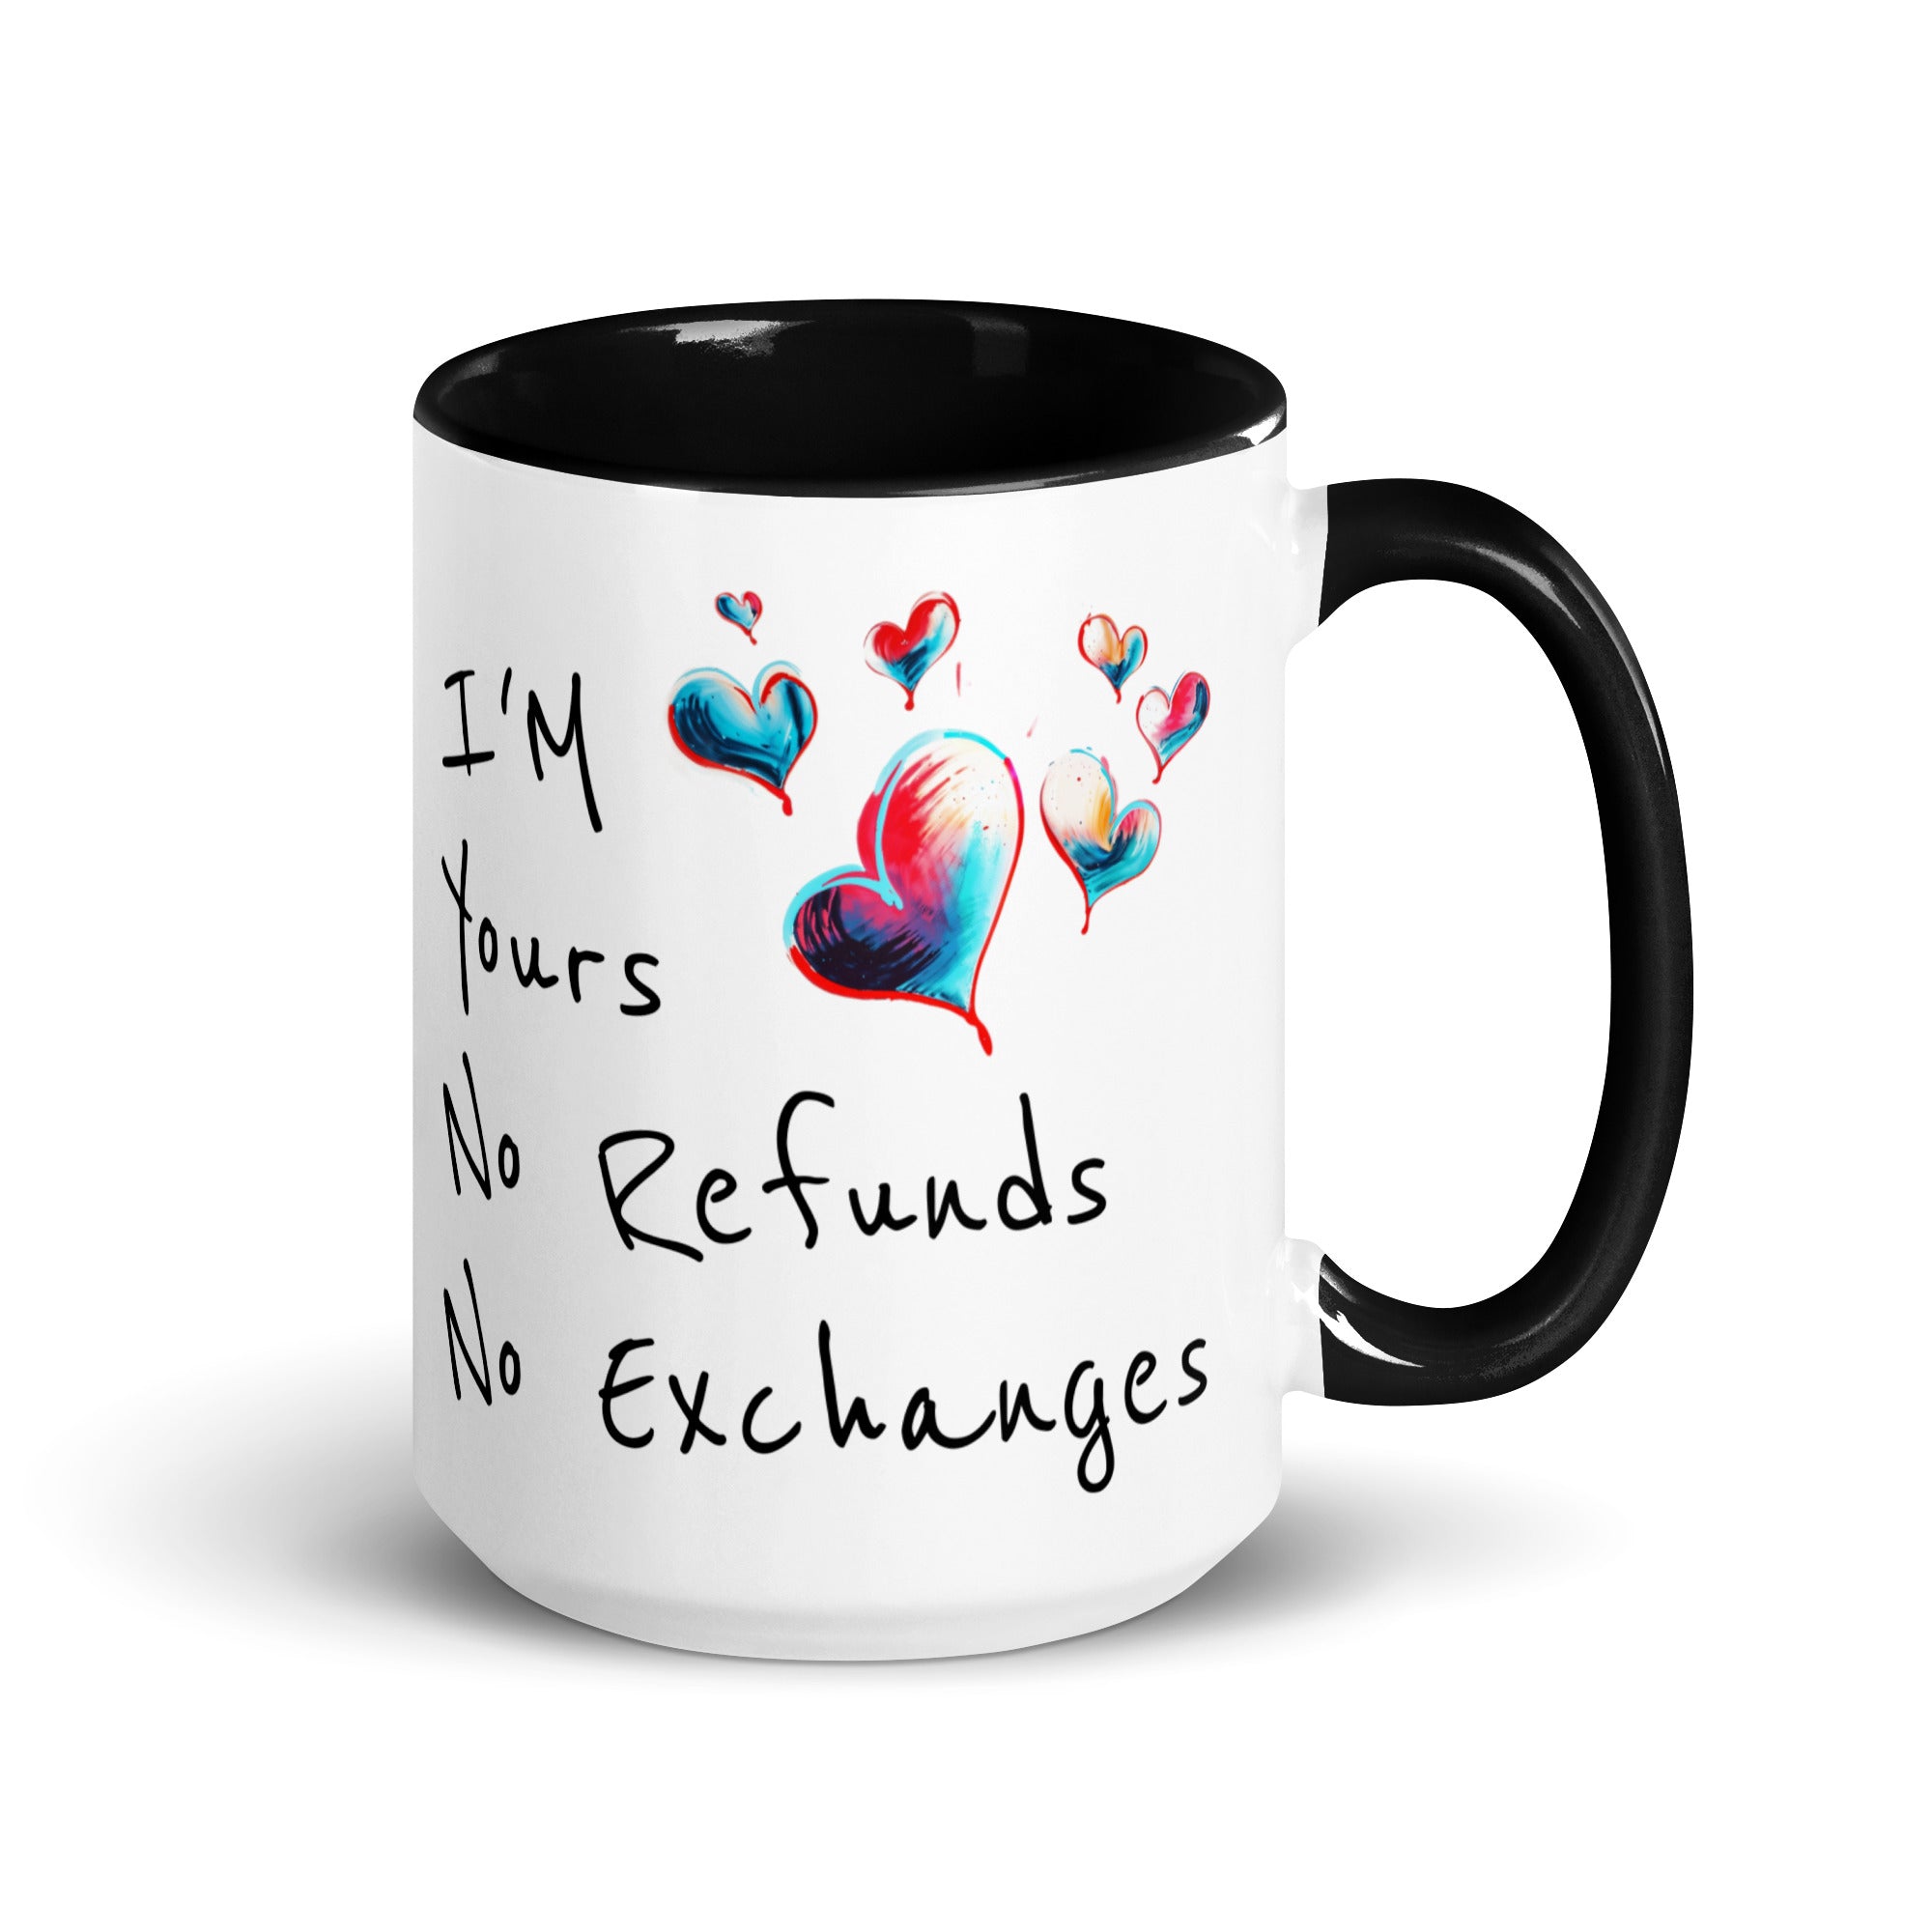 I'm Yours, No Refunds, No Exchanges Mug - Gift for Him & Her Black 15 oz DenBox